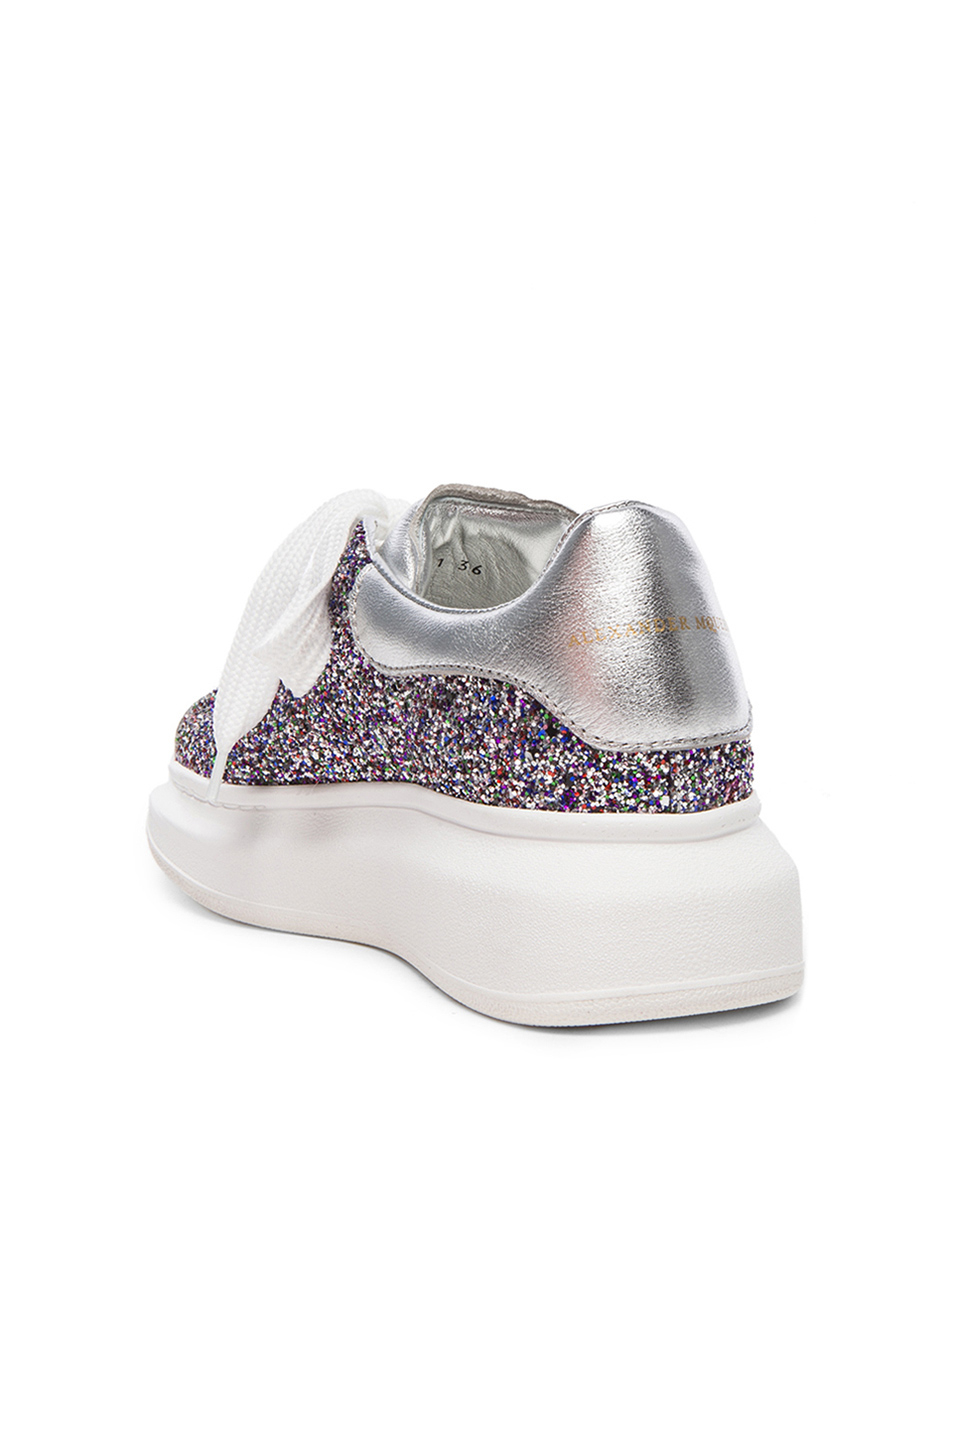 alexander mcqueen sparkly shoes